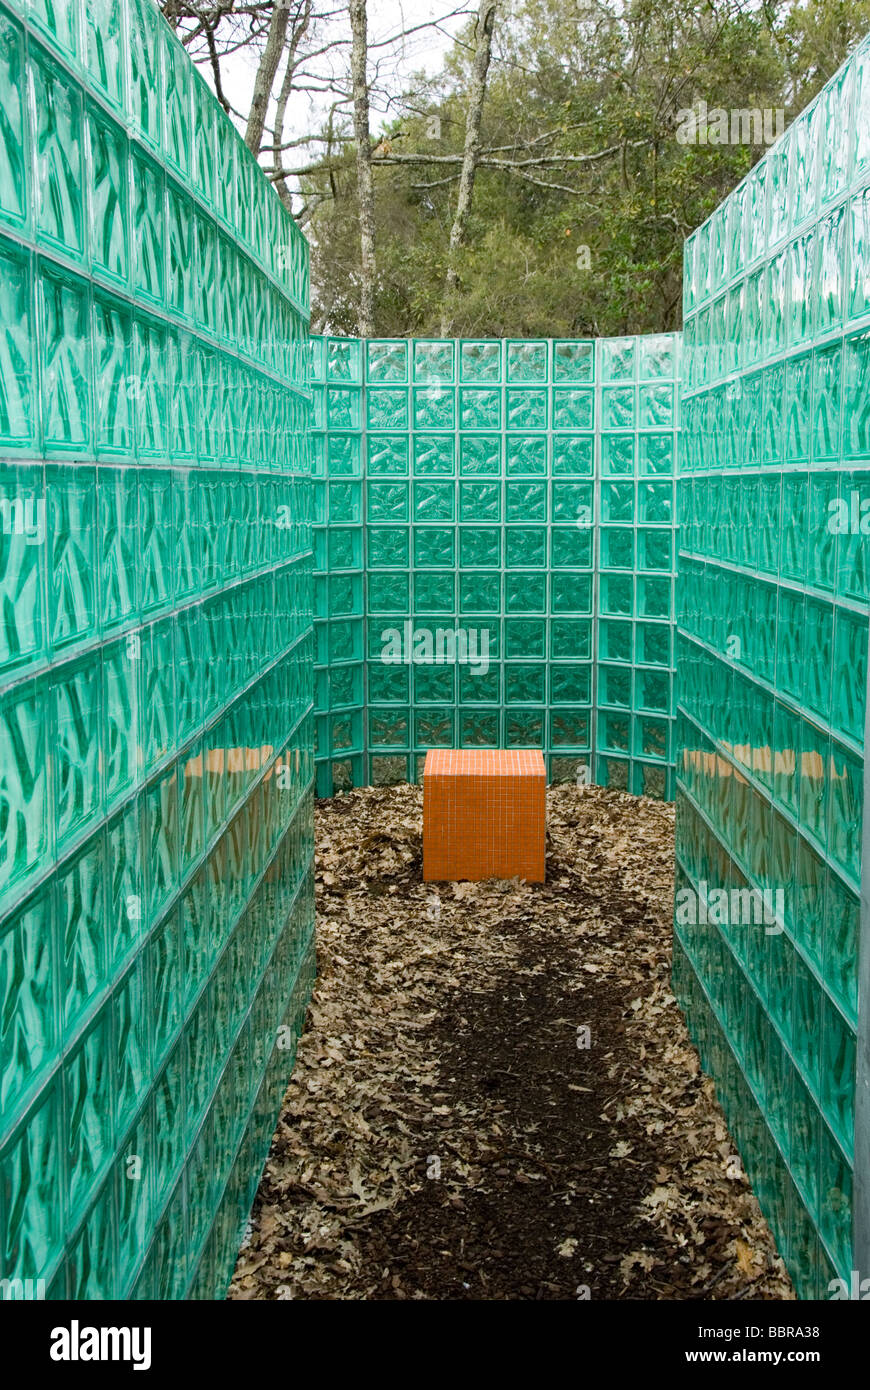 The Labyrinth - Jeff Saward - United Kingdom glass sculpture in the Chianti Sculpture Park Stock Photo